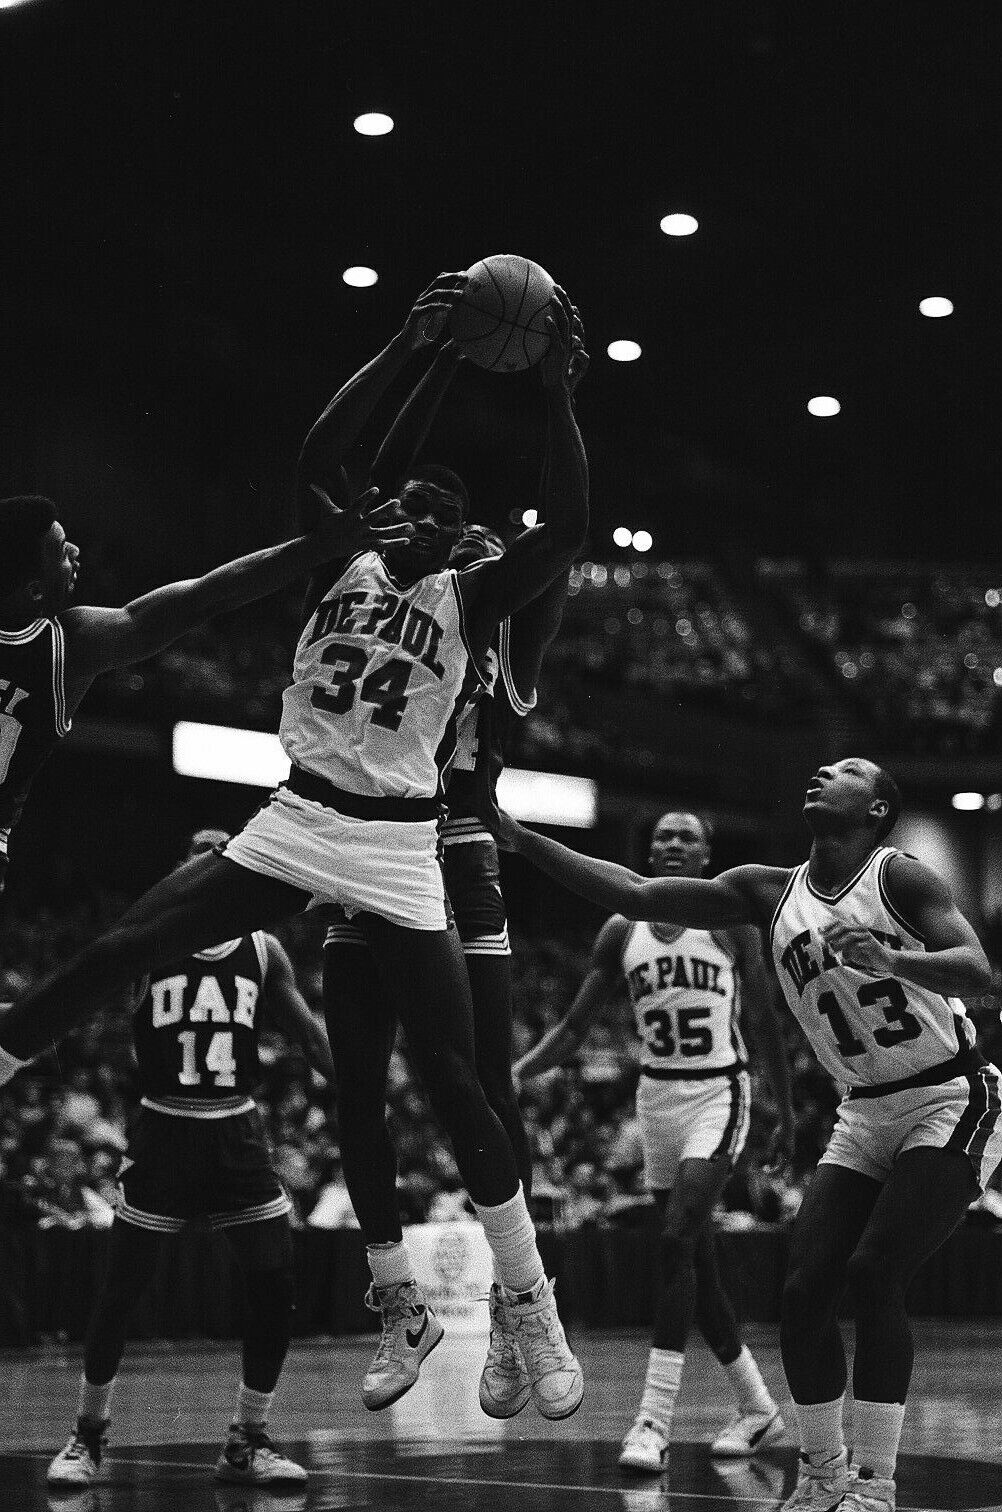 LD125-46 1986 College Basketball DePaul UAB Blazers (55) ORIG 35mm B&W NEGATIVES Без бренда - фотография #11